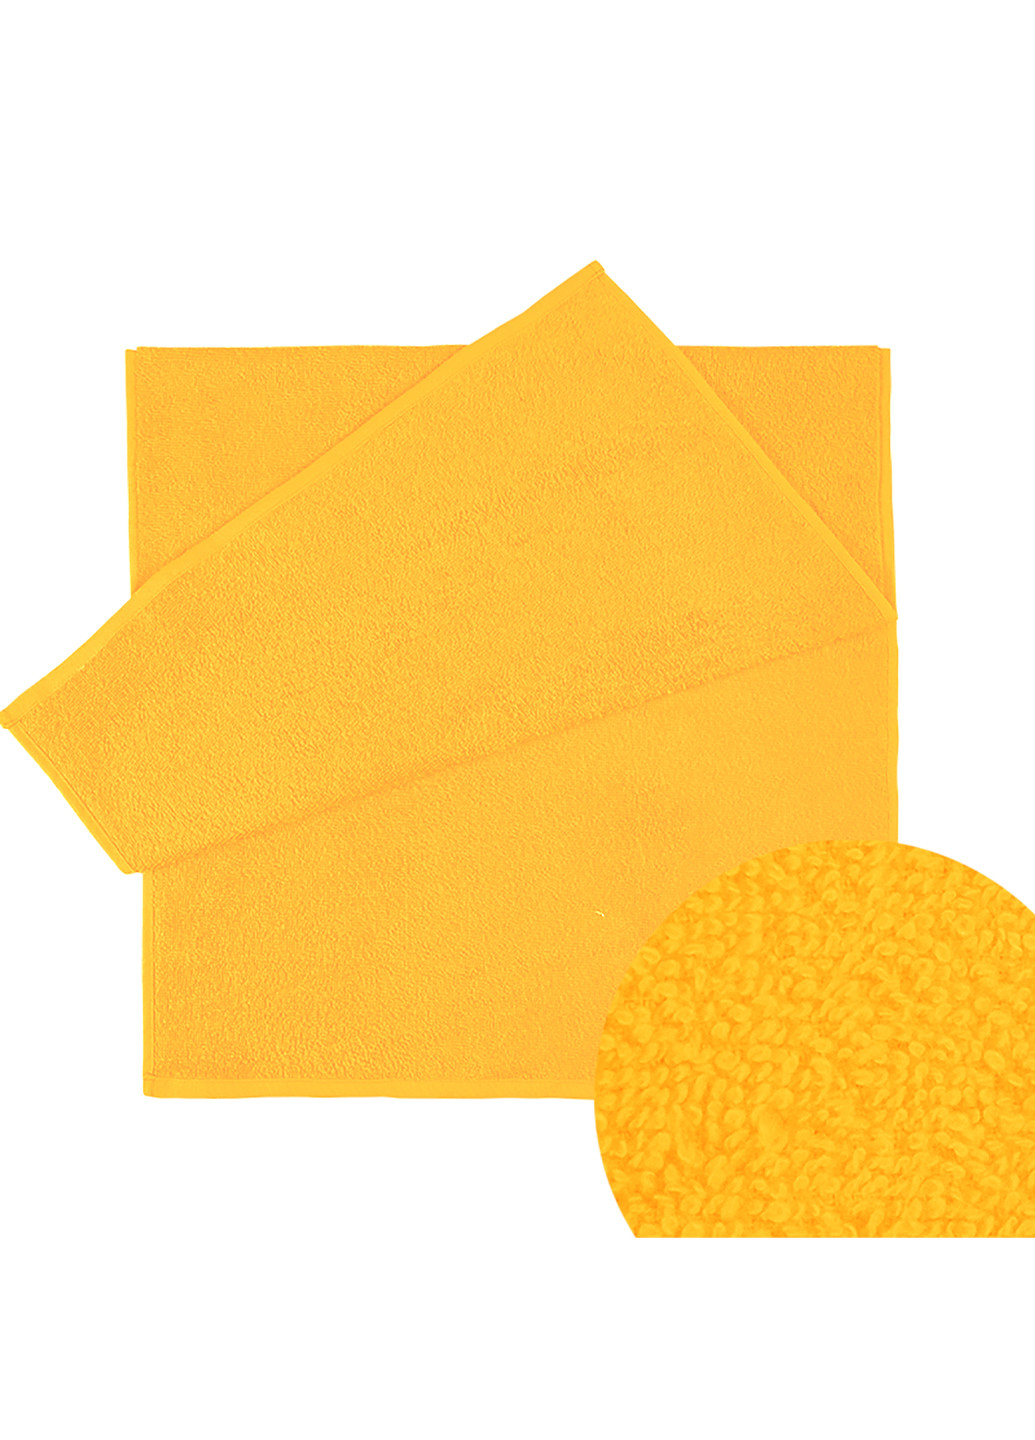 Ярослав полотенце яр-400 махровое 40х70 однотонный желтый производство - Украина